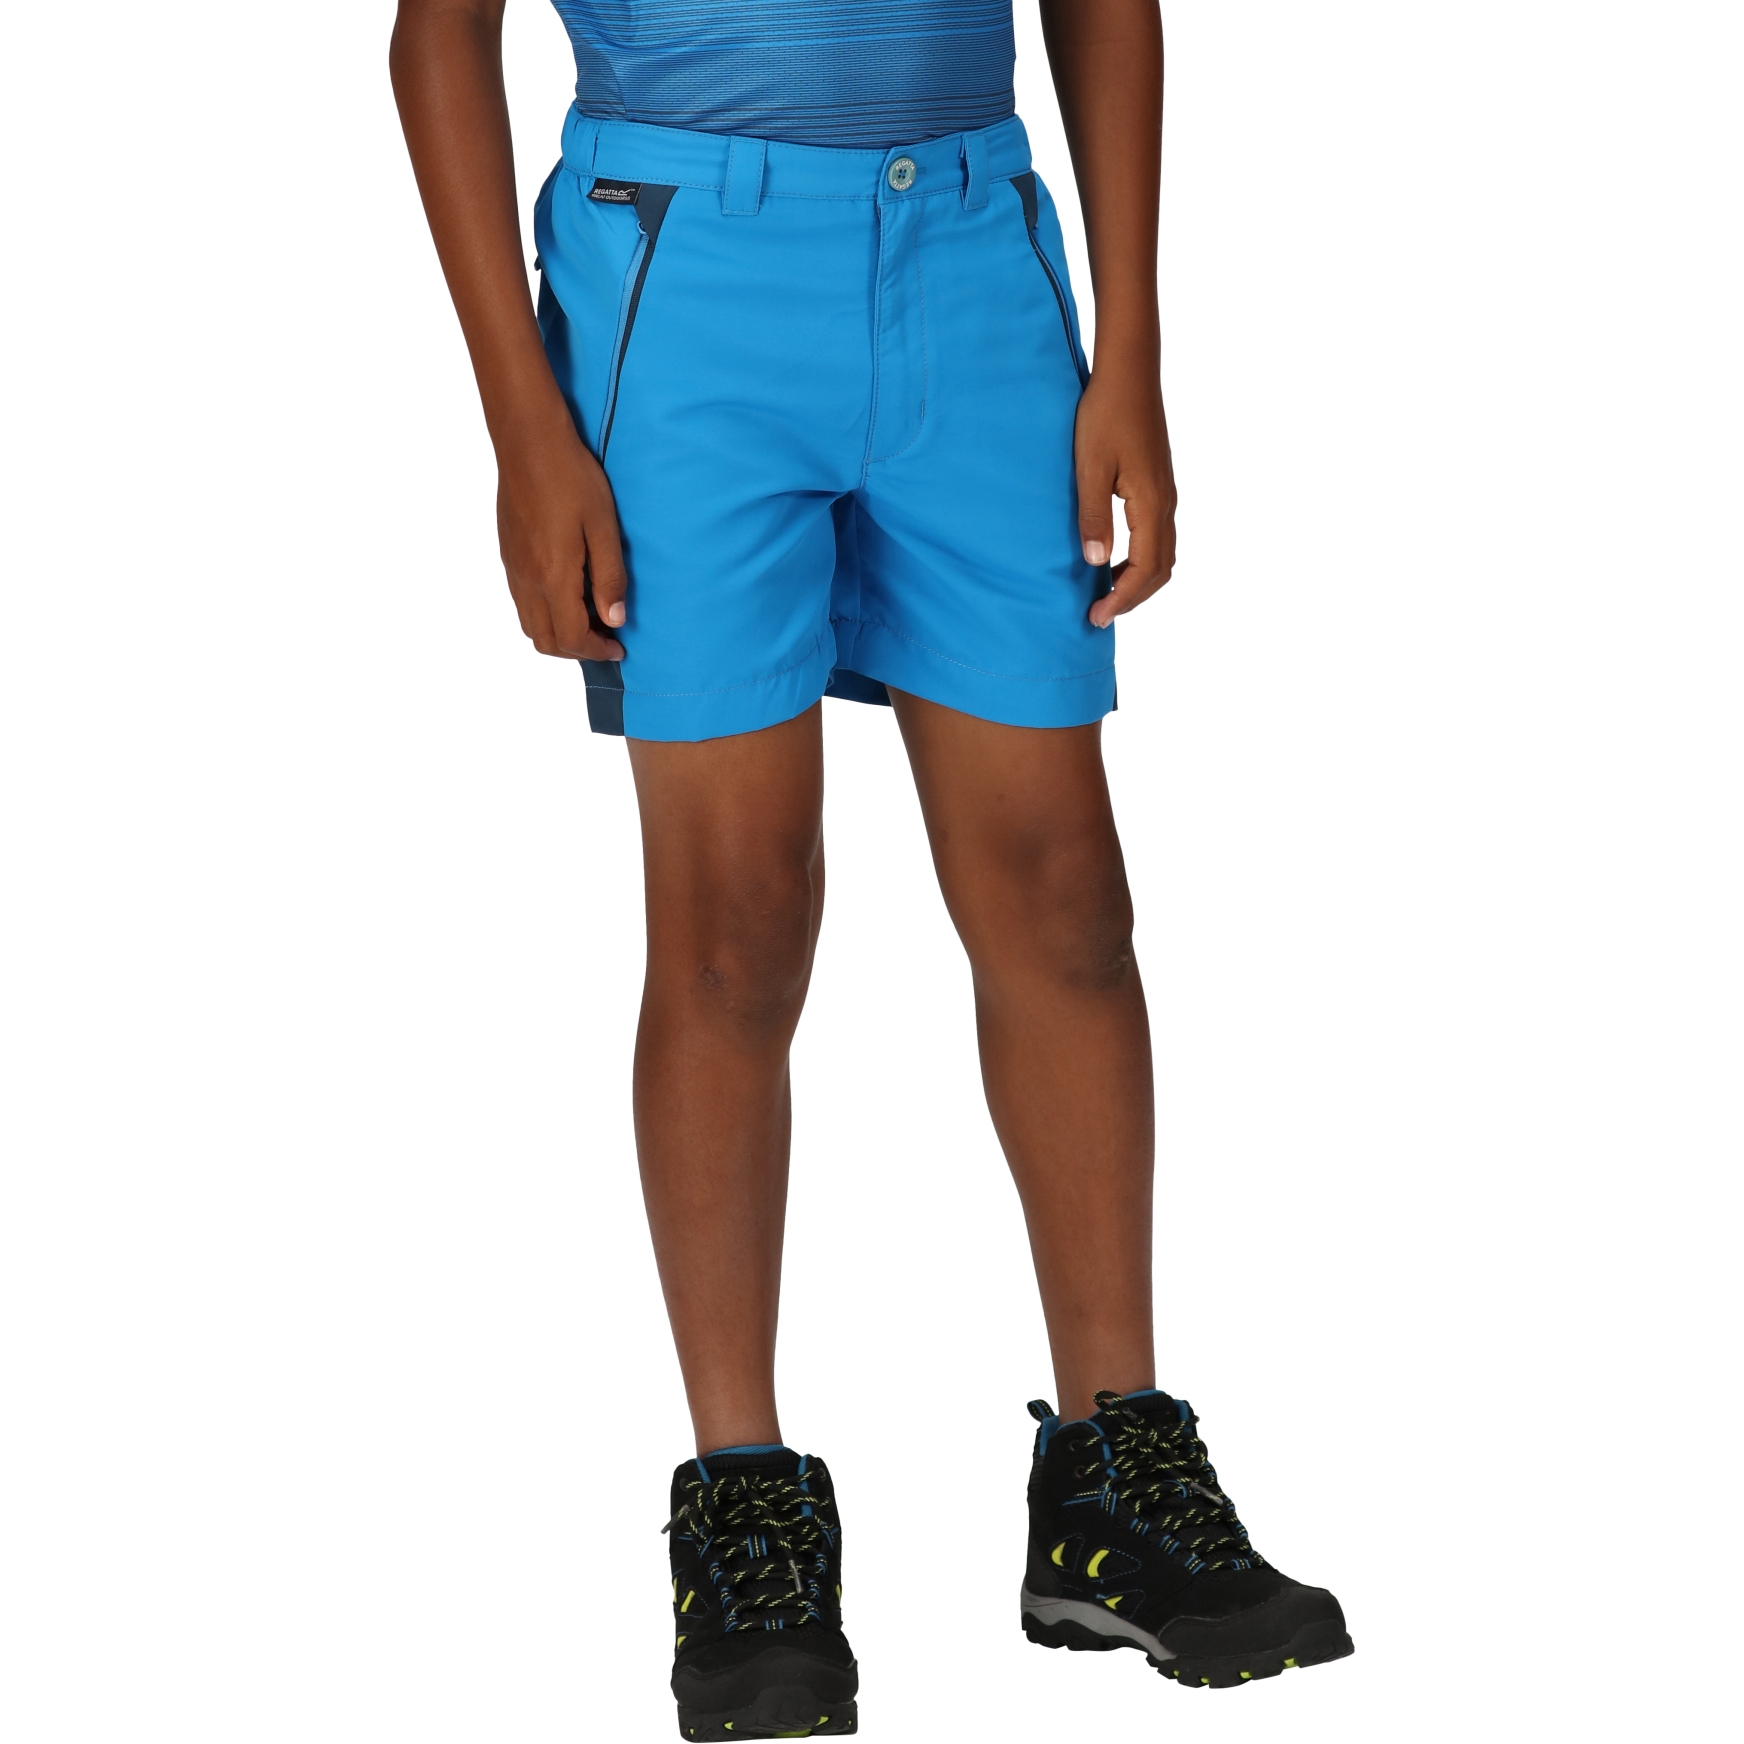 Productfoto van Regatta Sorcer Mountain Shorts III Kinderen - Indigo Blue/Blue Wing DHE